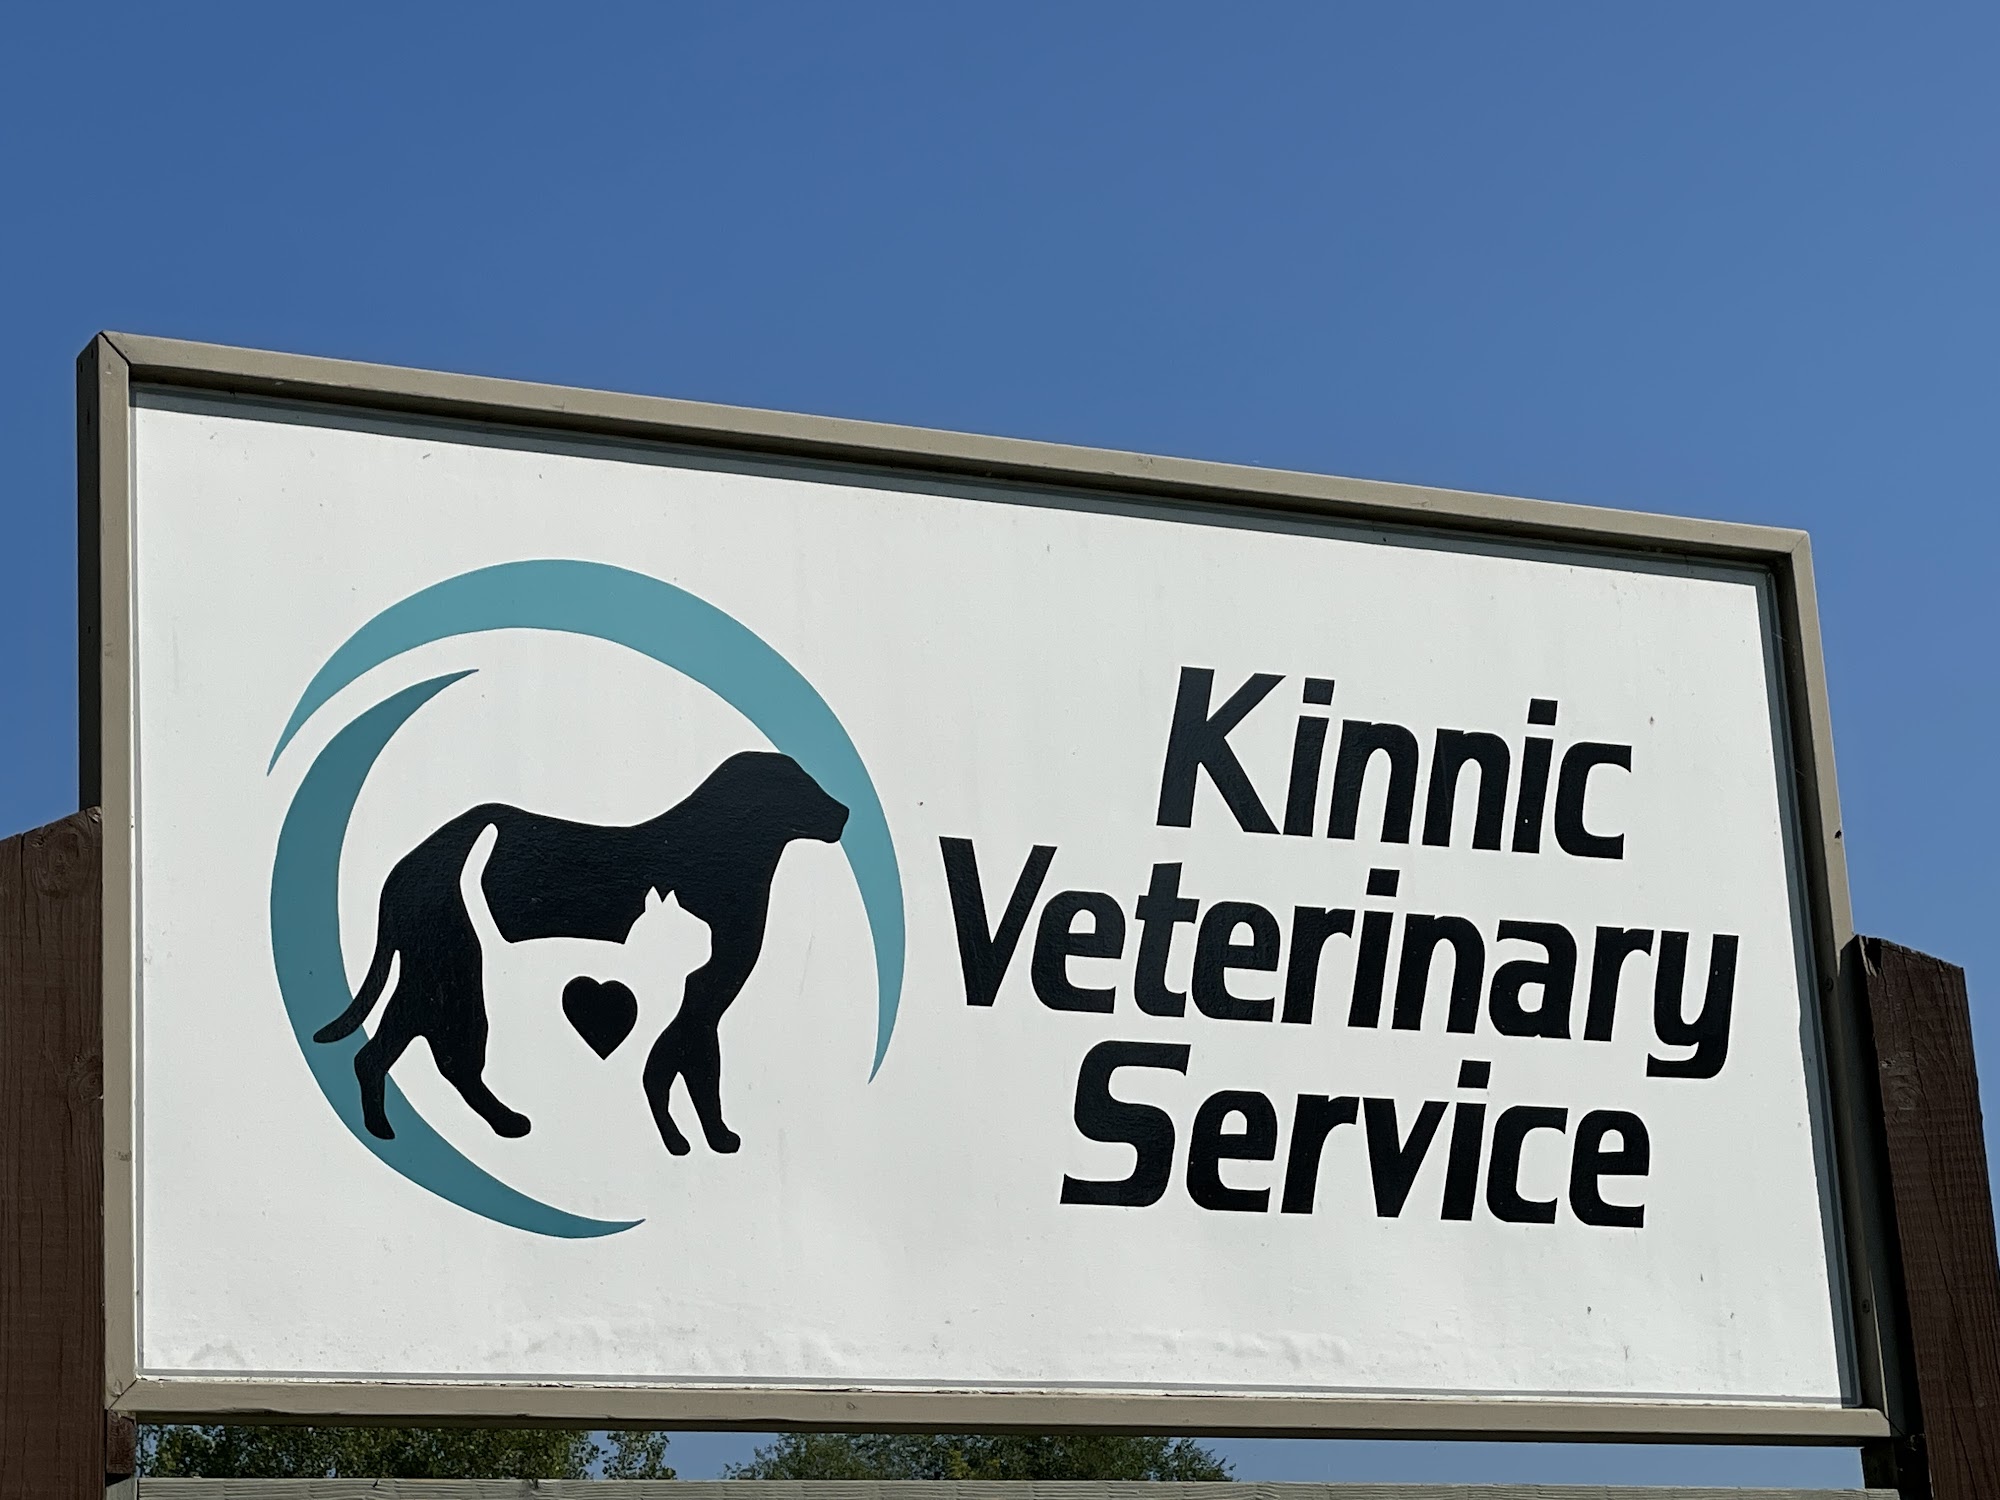 Kinnic Veterinary Service 1333 N Main St, River Falls Wisconsin 54022